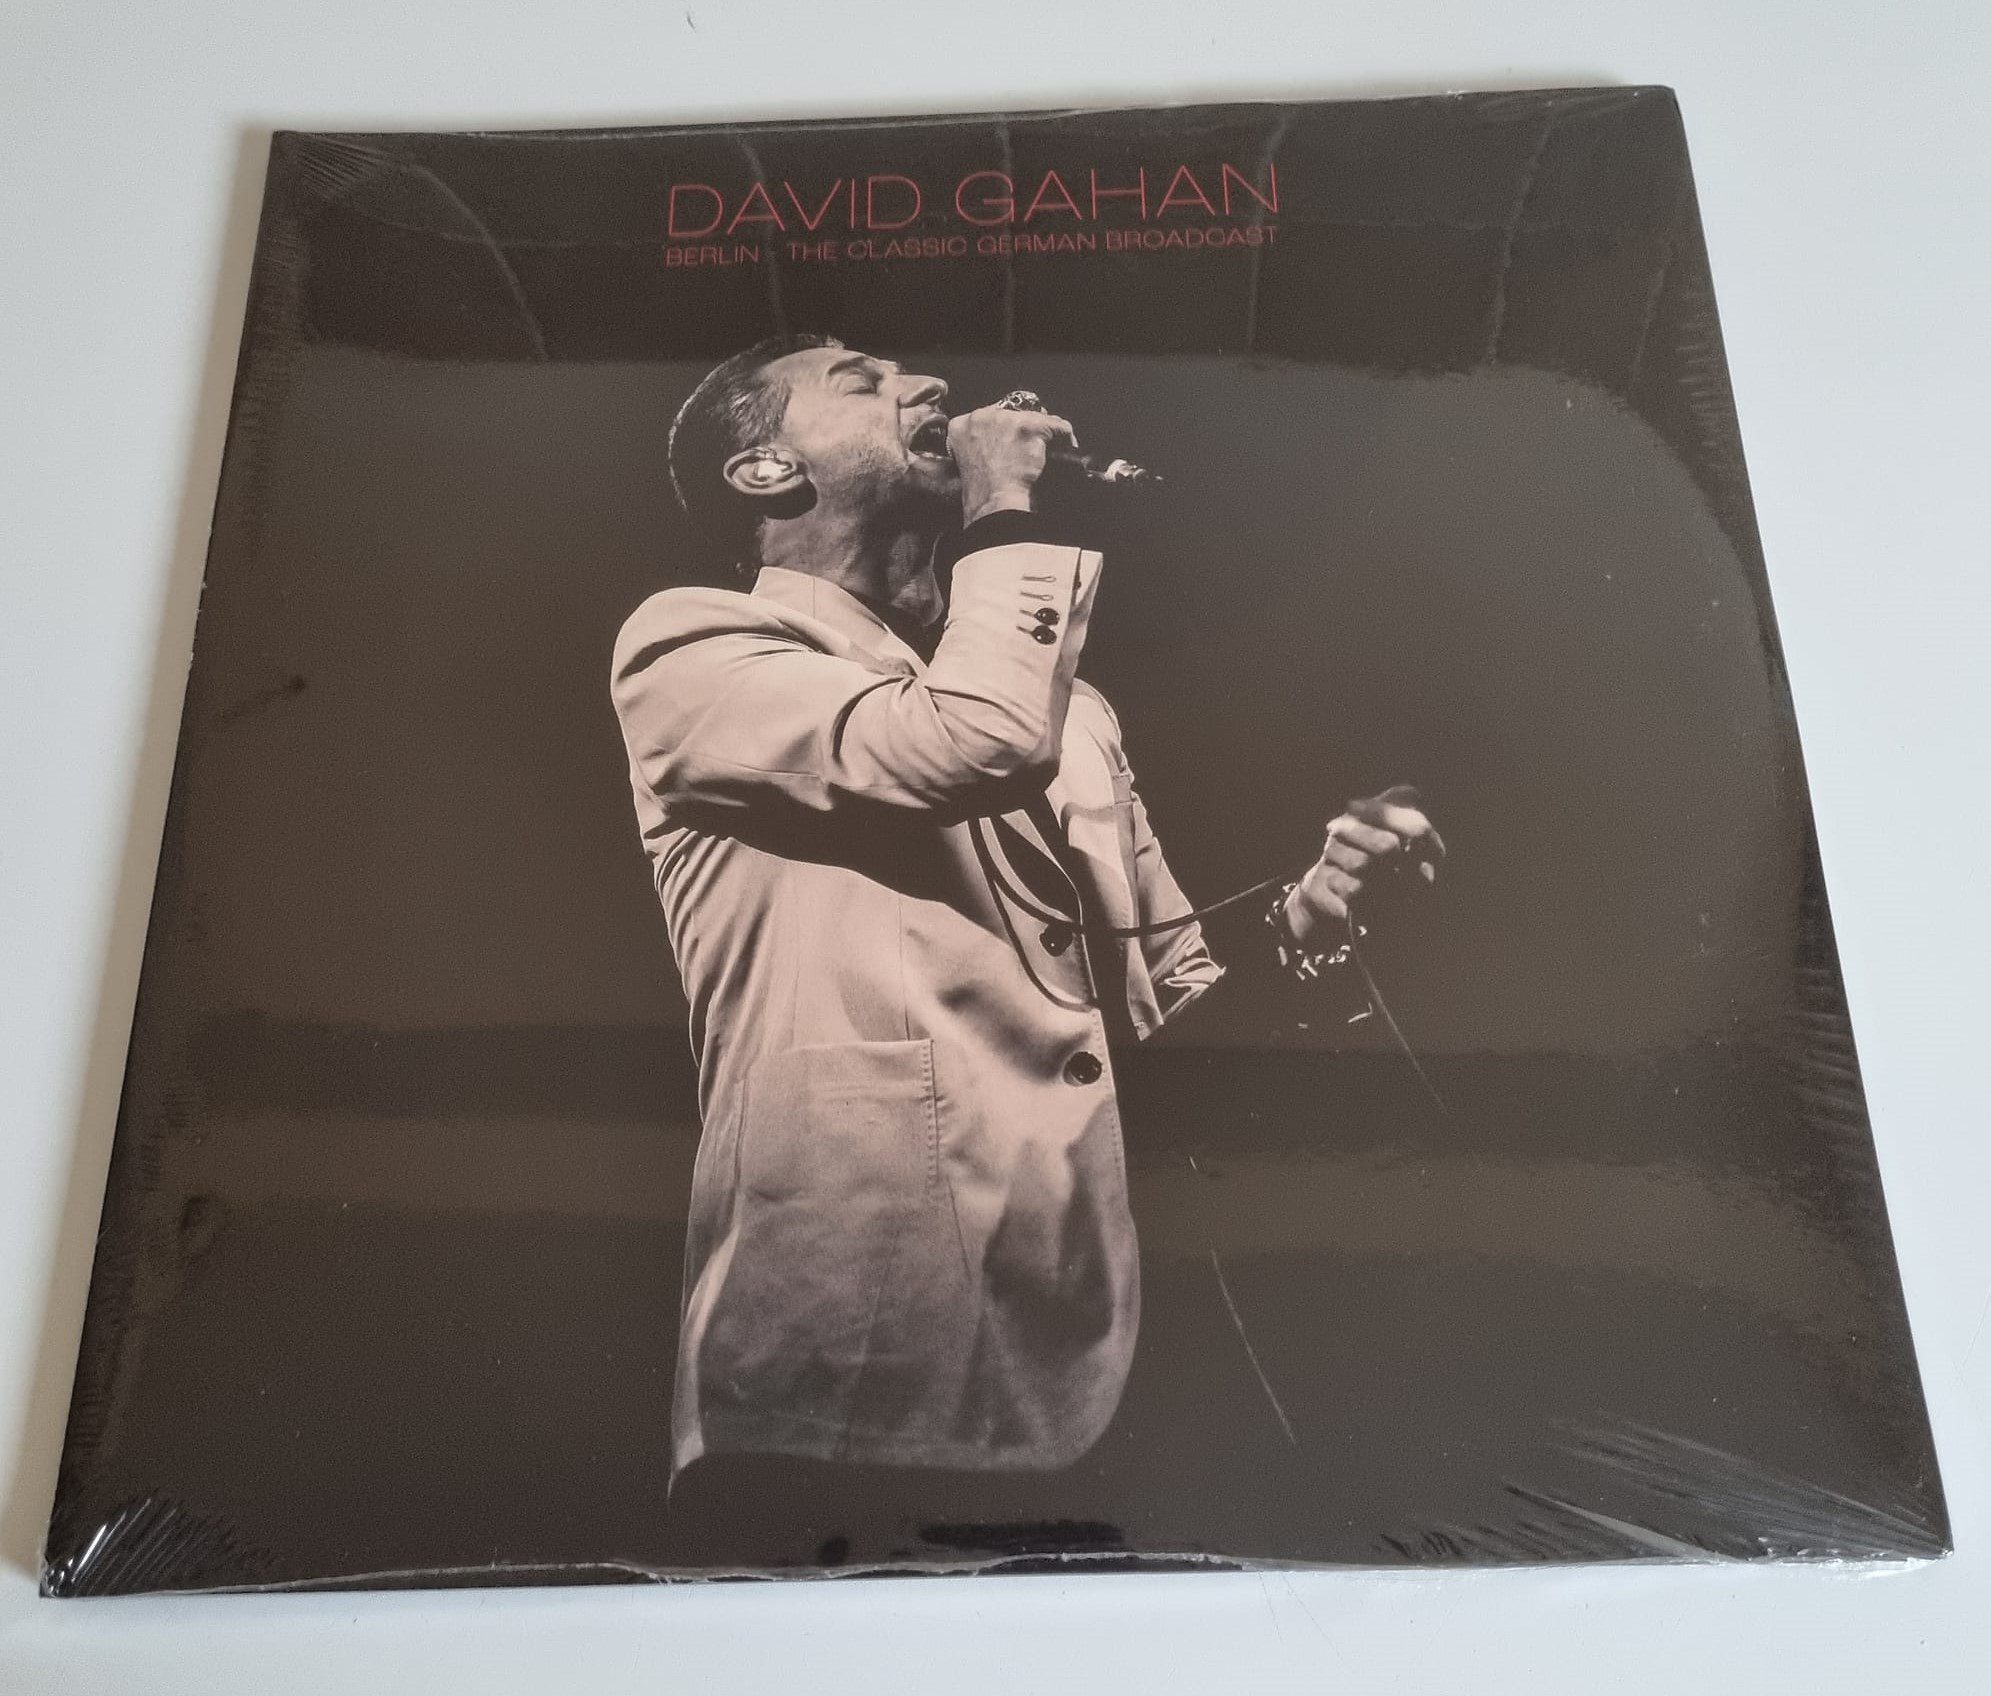 Buy this rare David Gahan record by clicking here